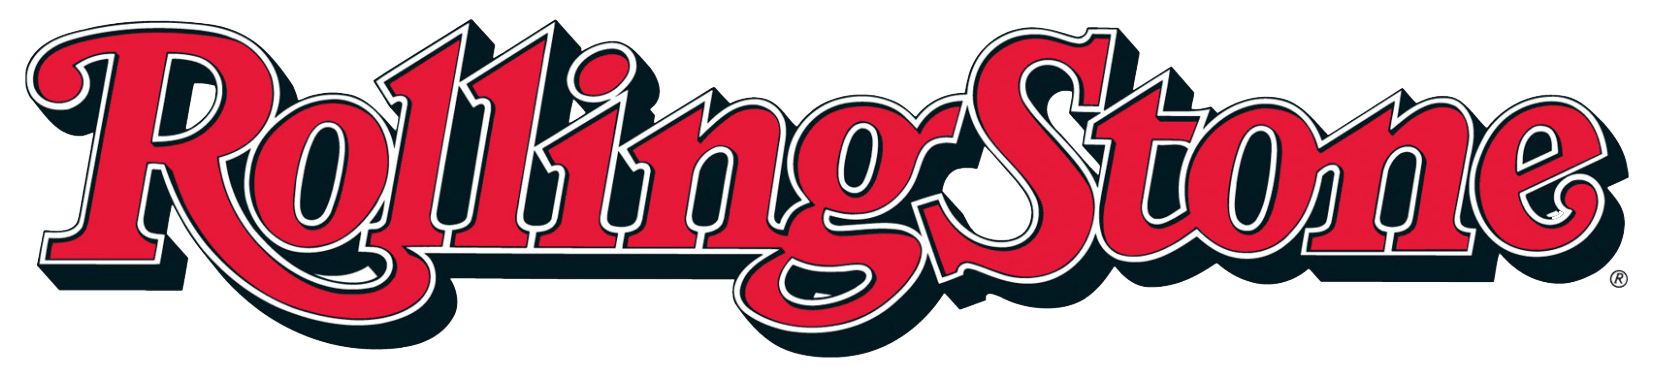 New Rolling Stone Logo - Rolling Stones Png Logo - Free Transparent PNG Logos